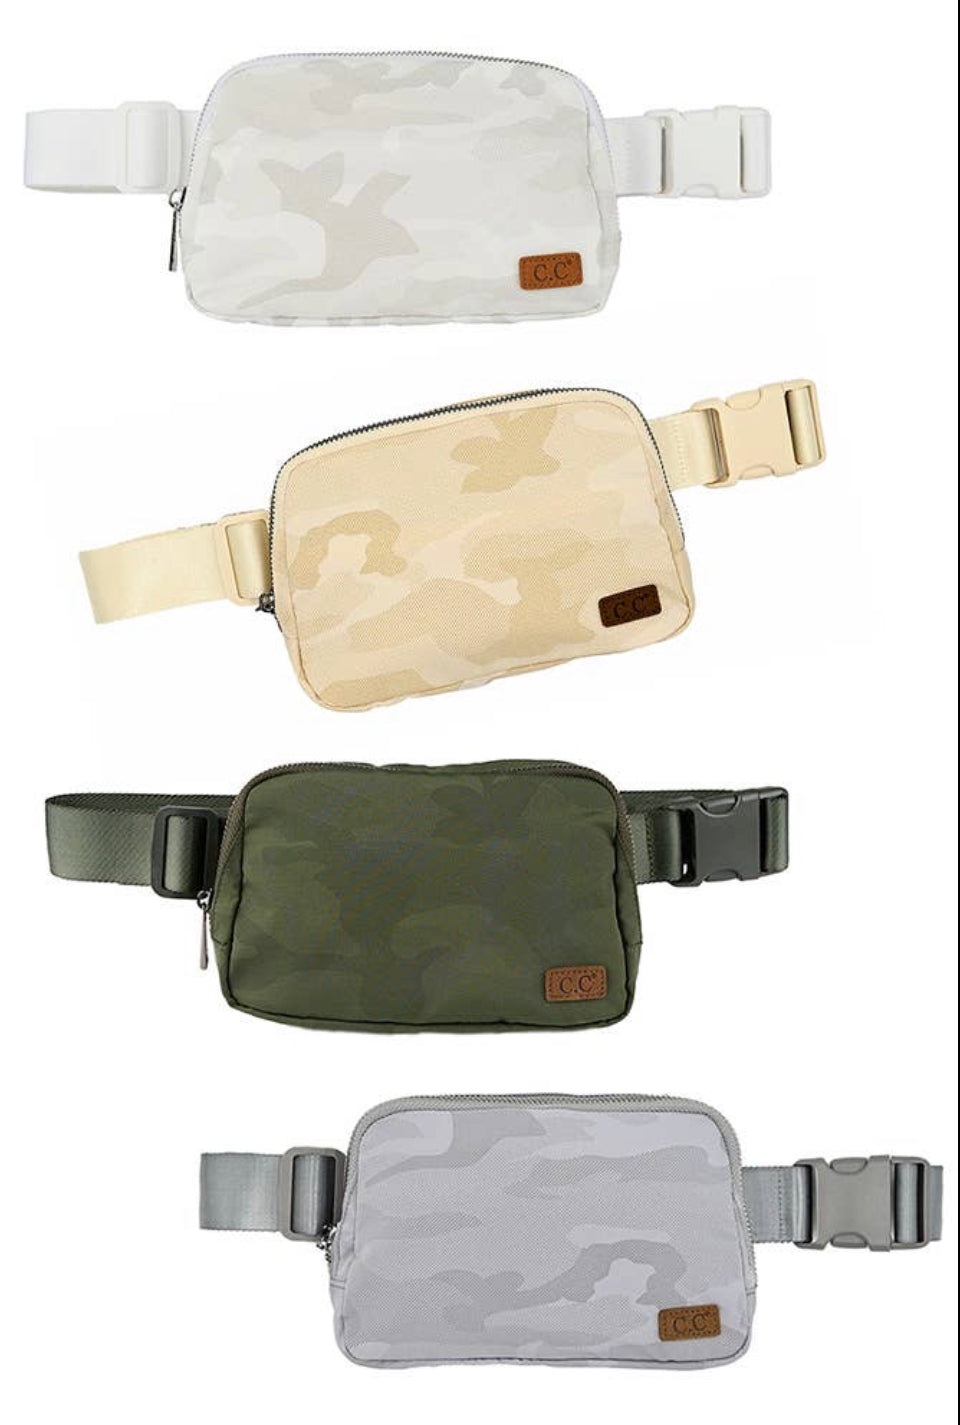 C.C. Camo mini belt bags